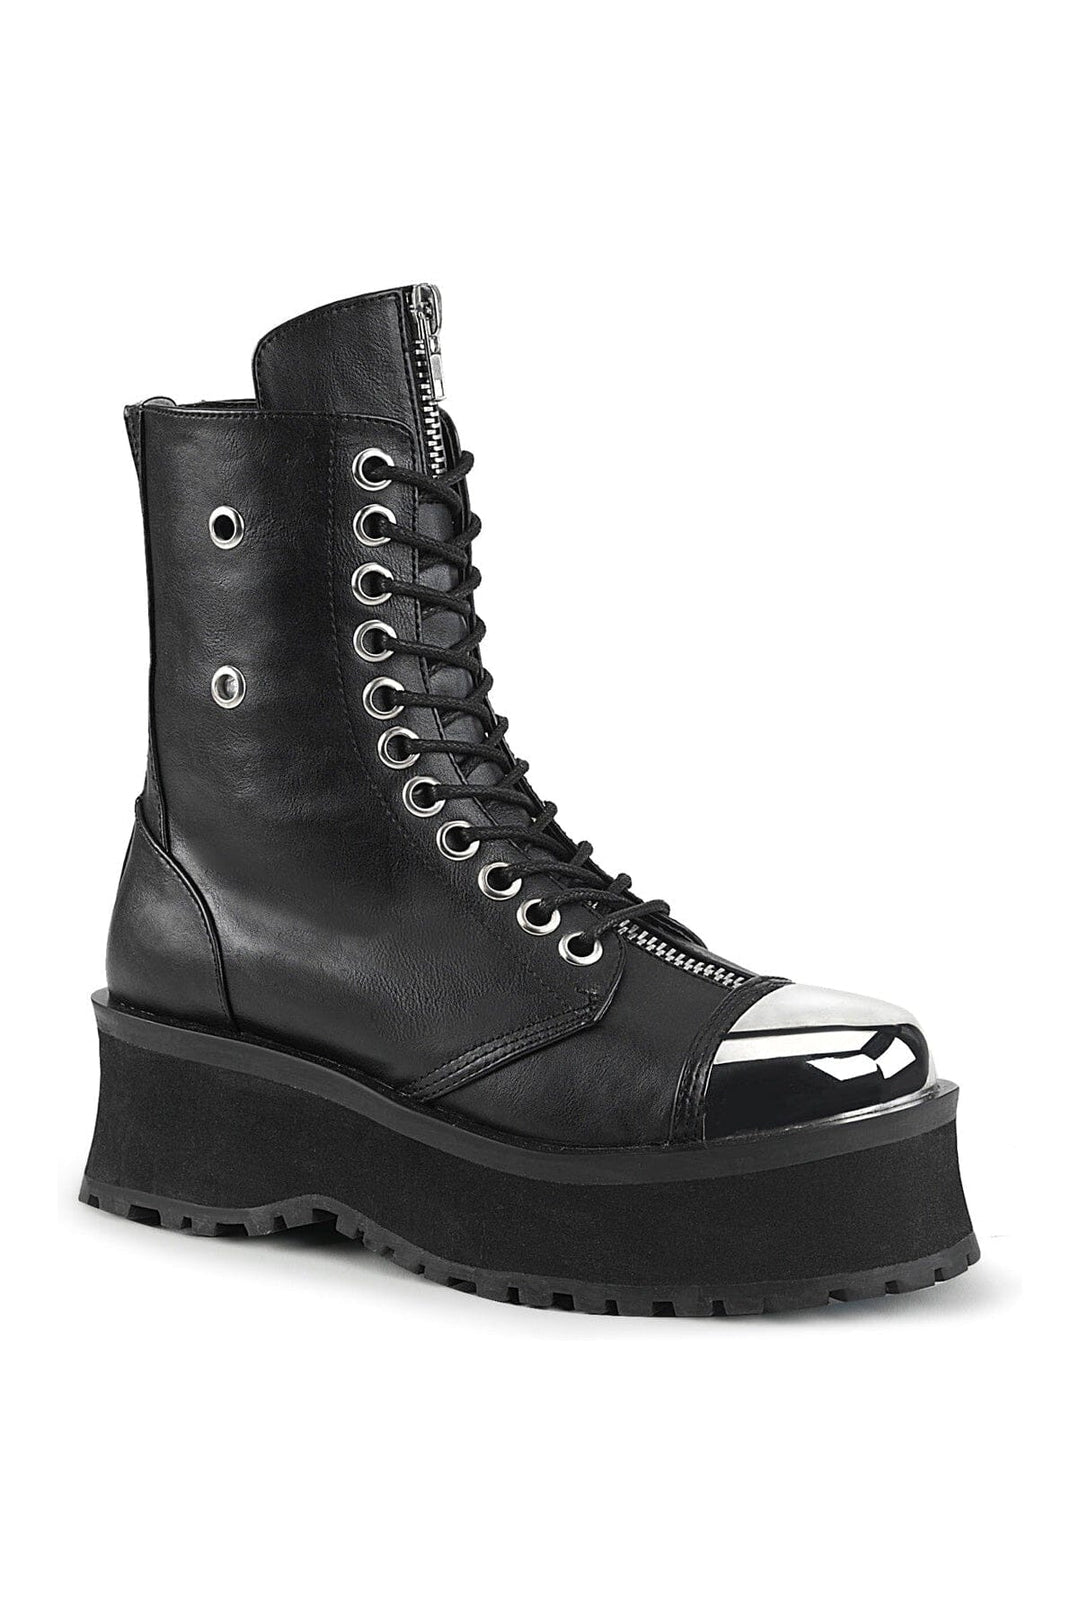 GRAVEDIGGER-10 Black Vegan Leather Ankle Boot-Ankle Boots-Demonia-Black-10-Vegan Leather-SEXYSHOES.COM